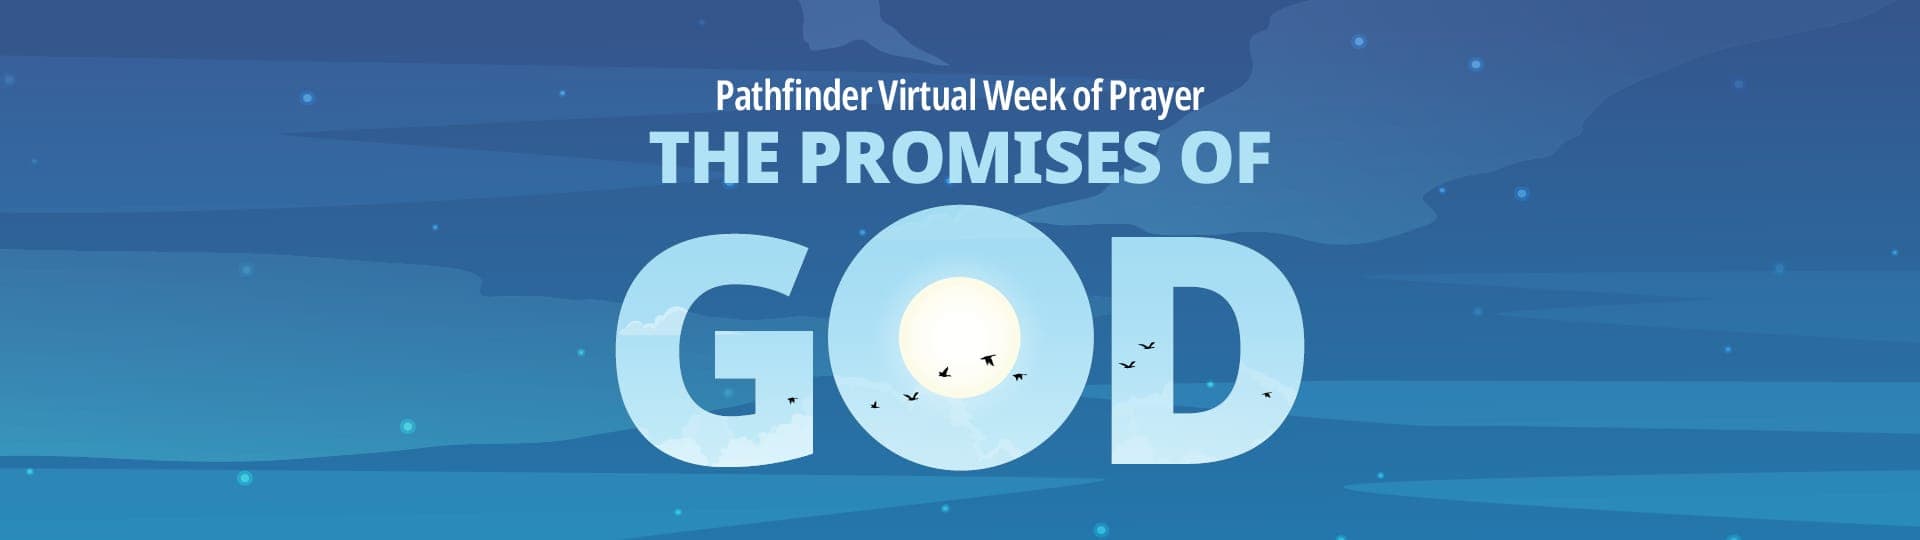 The Promises of God week of prayer event header